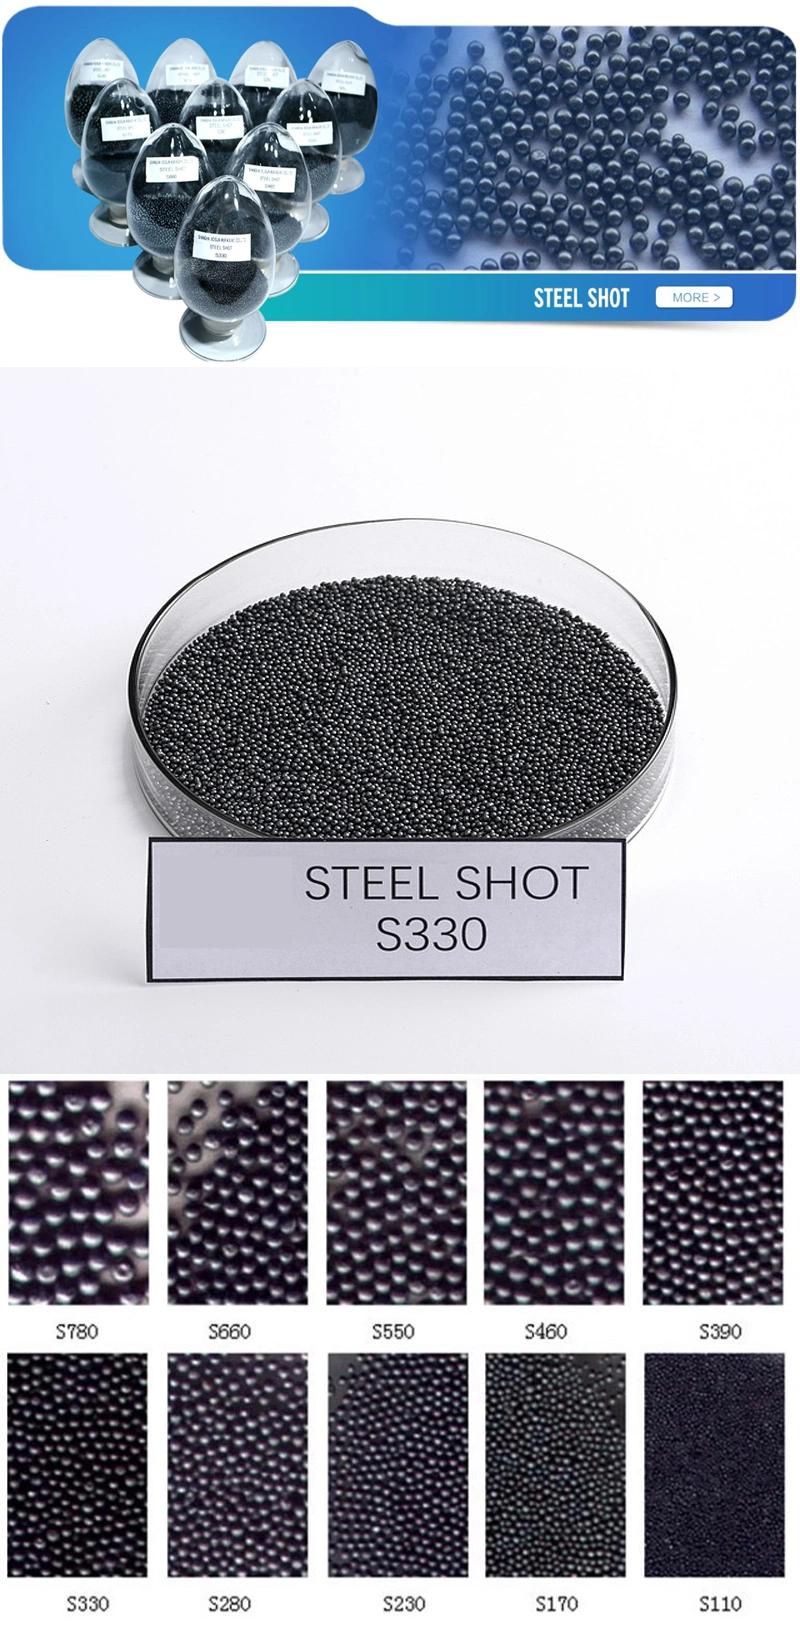 Shot Blasting Abrasive Steel Shot Ball S330 From Chinese Supplier